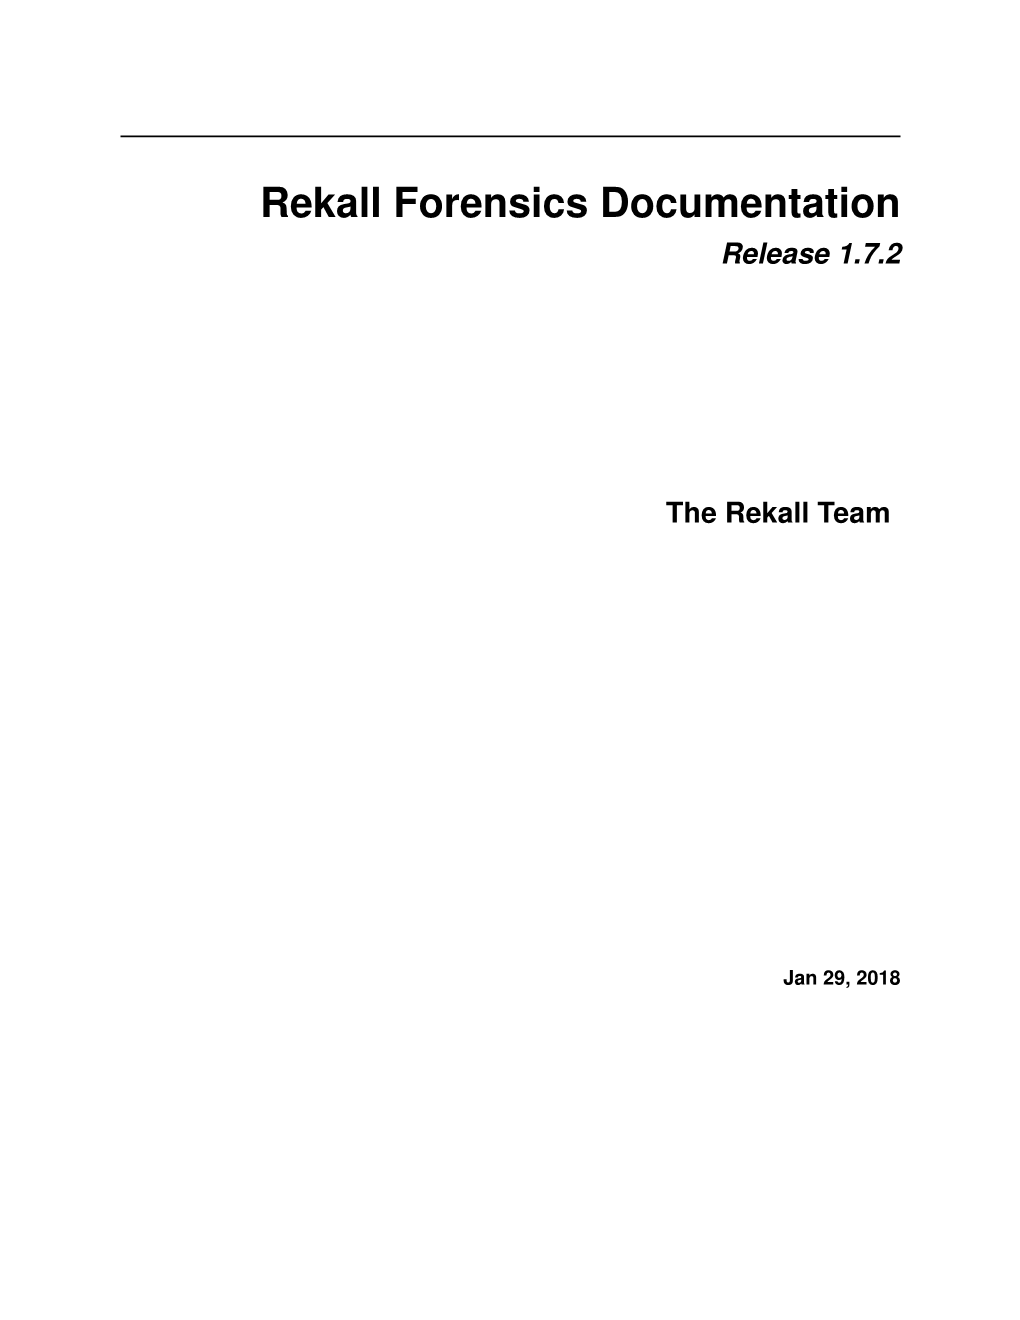 Rekall Forensics Documentation Release 1.7.2